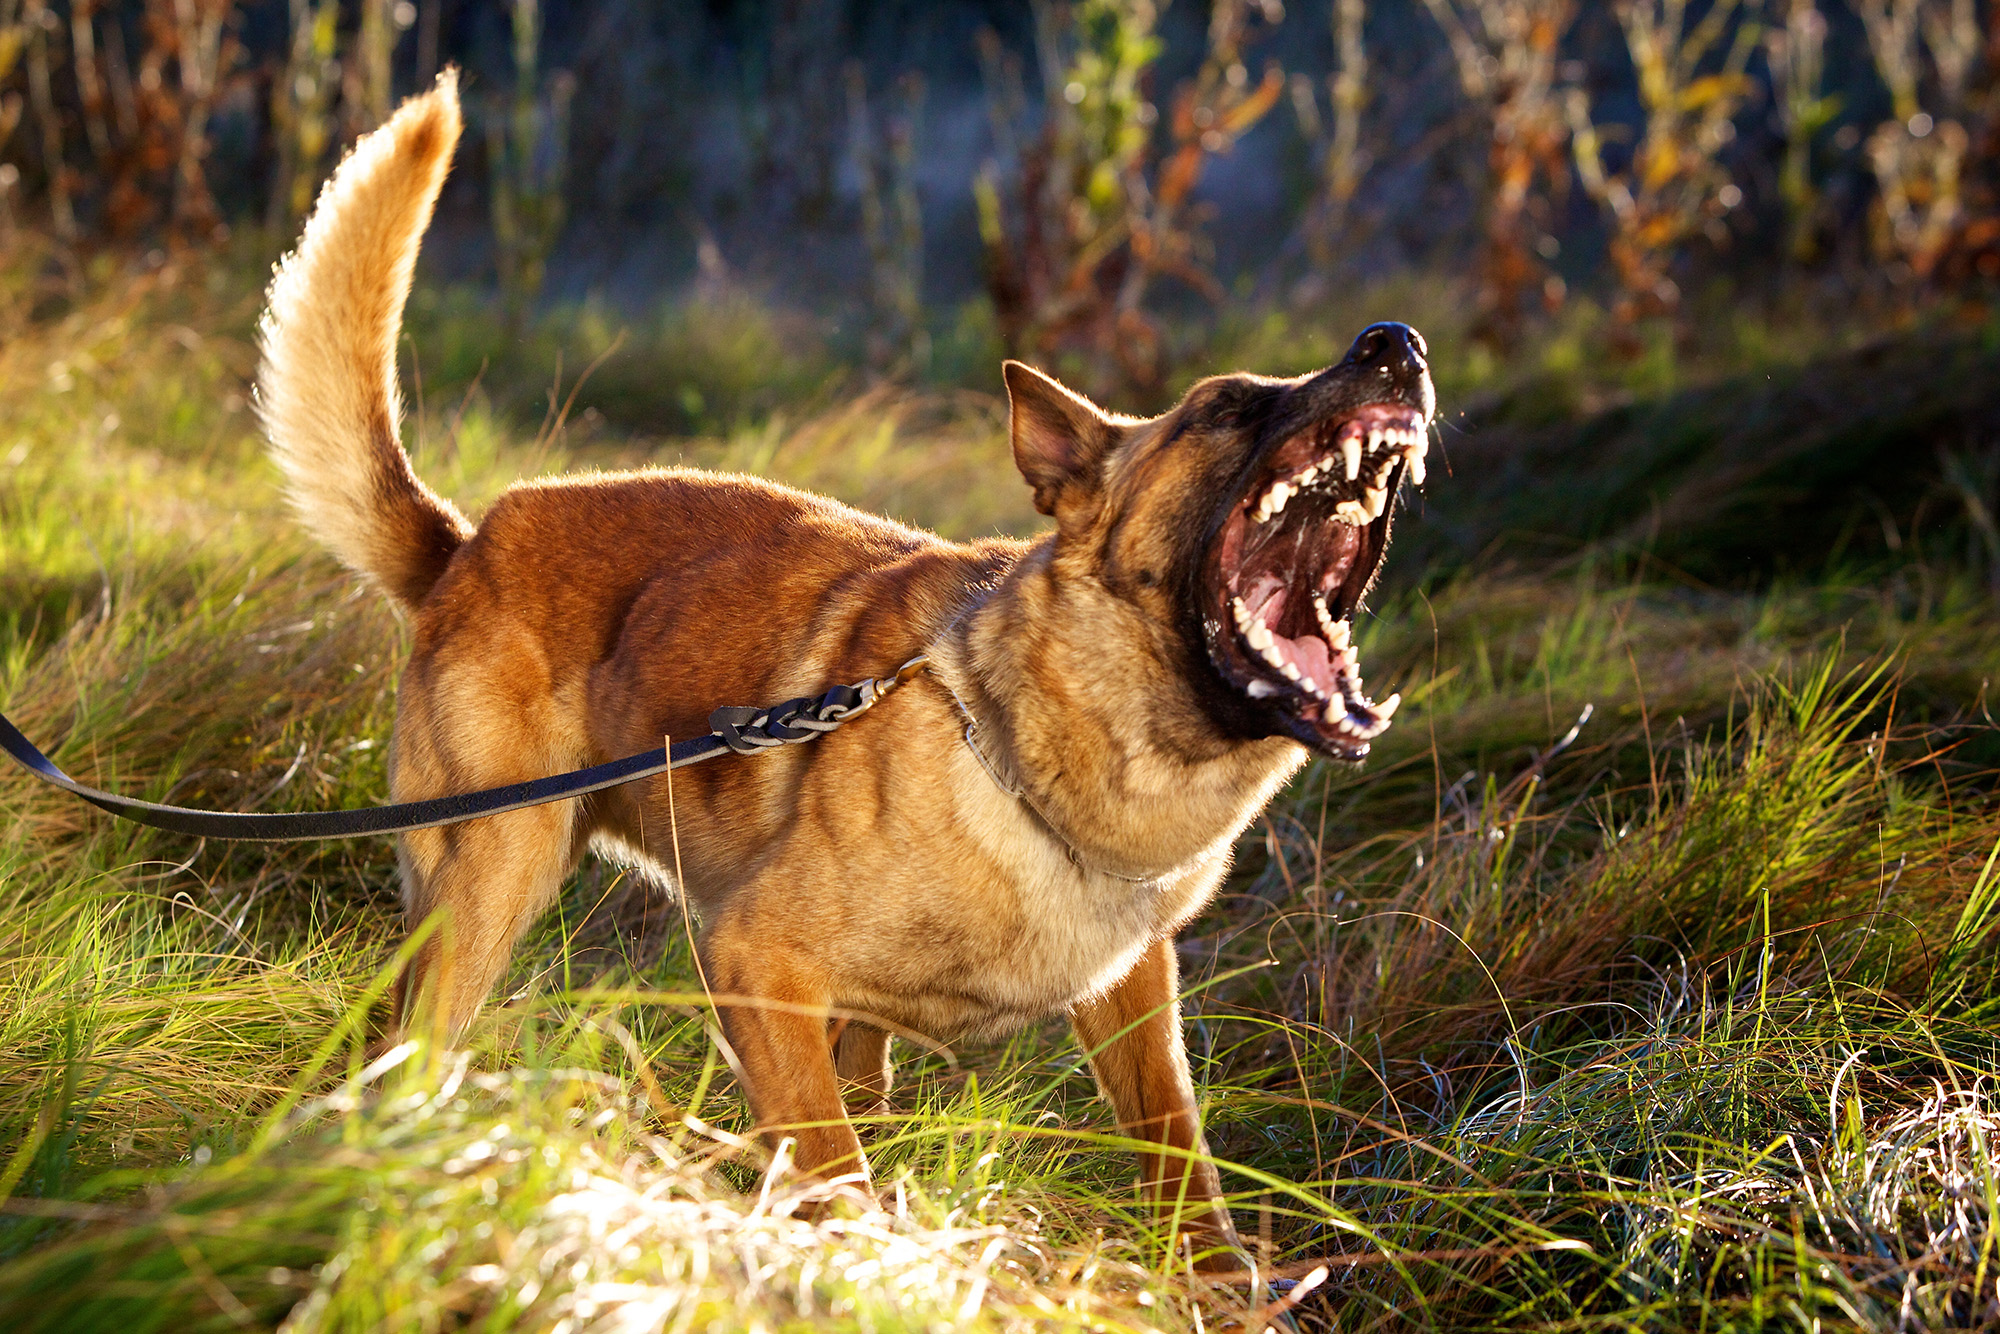 Dog Attack Birmingham, Animal Bites - Poorly trained pets, bad dog, dangerous animals